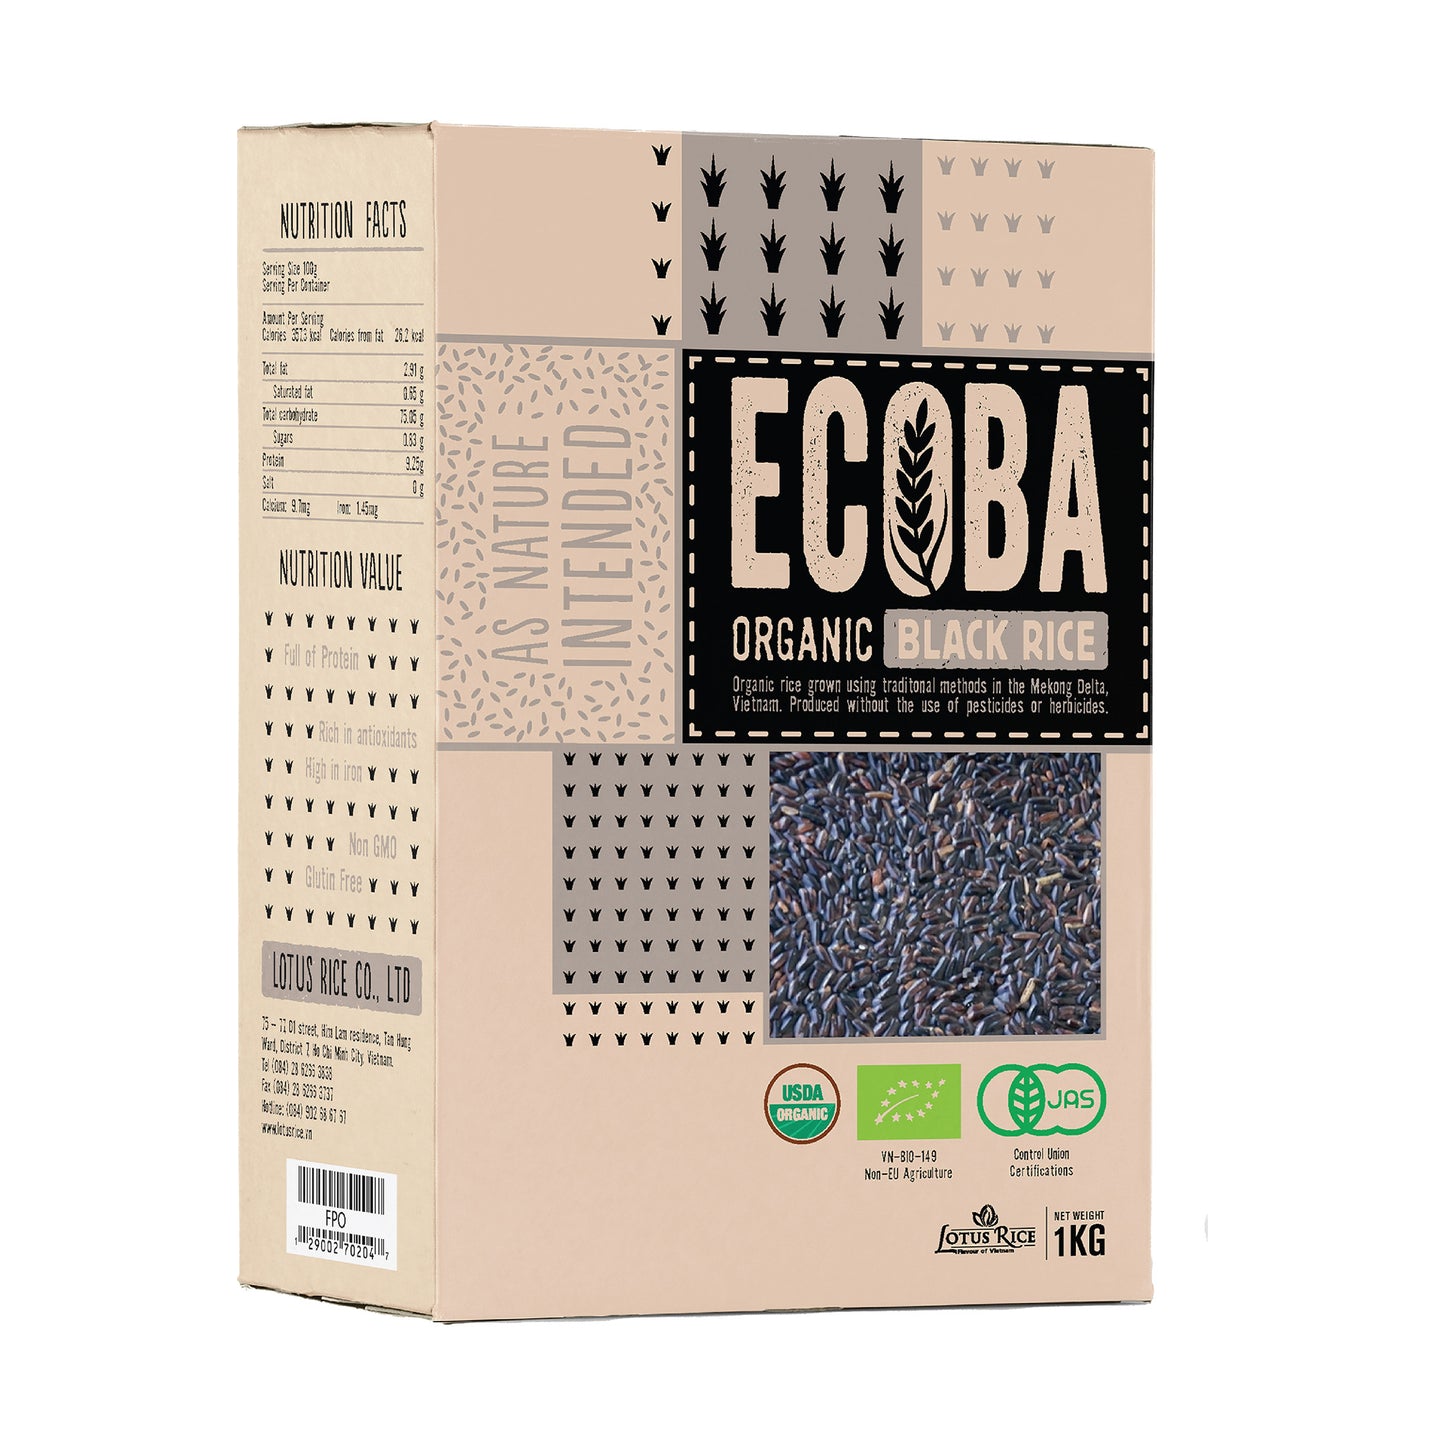 有机黑米ECOBA (1kg*20)